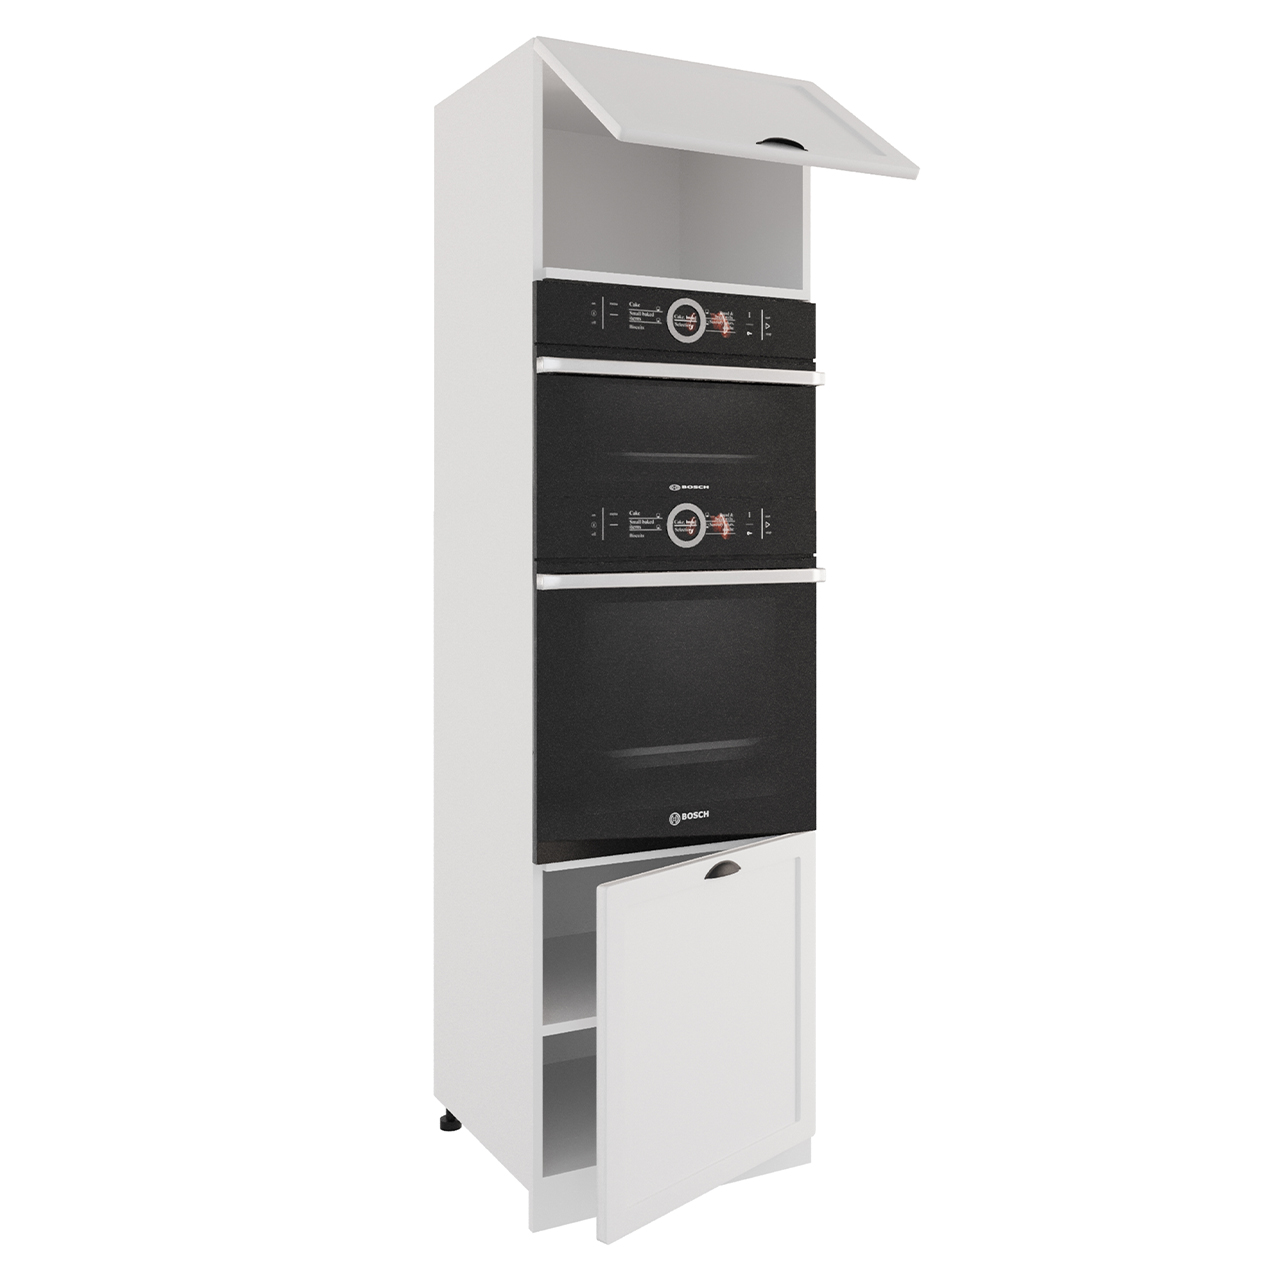 Base Cabinet for built-in oven and microwave oven ADELE D60PK MV/2133 P/L navy blue matt